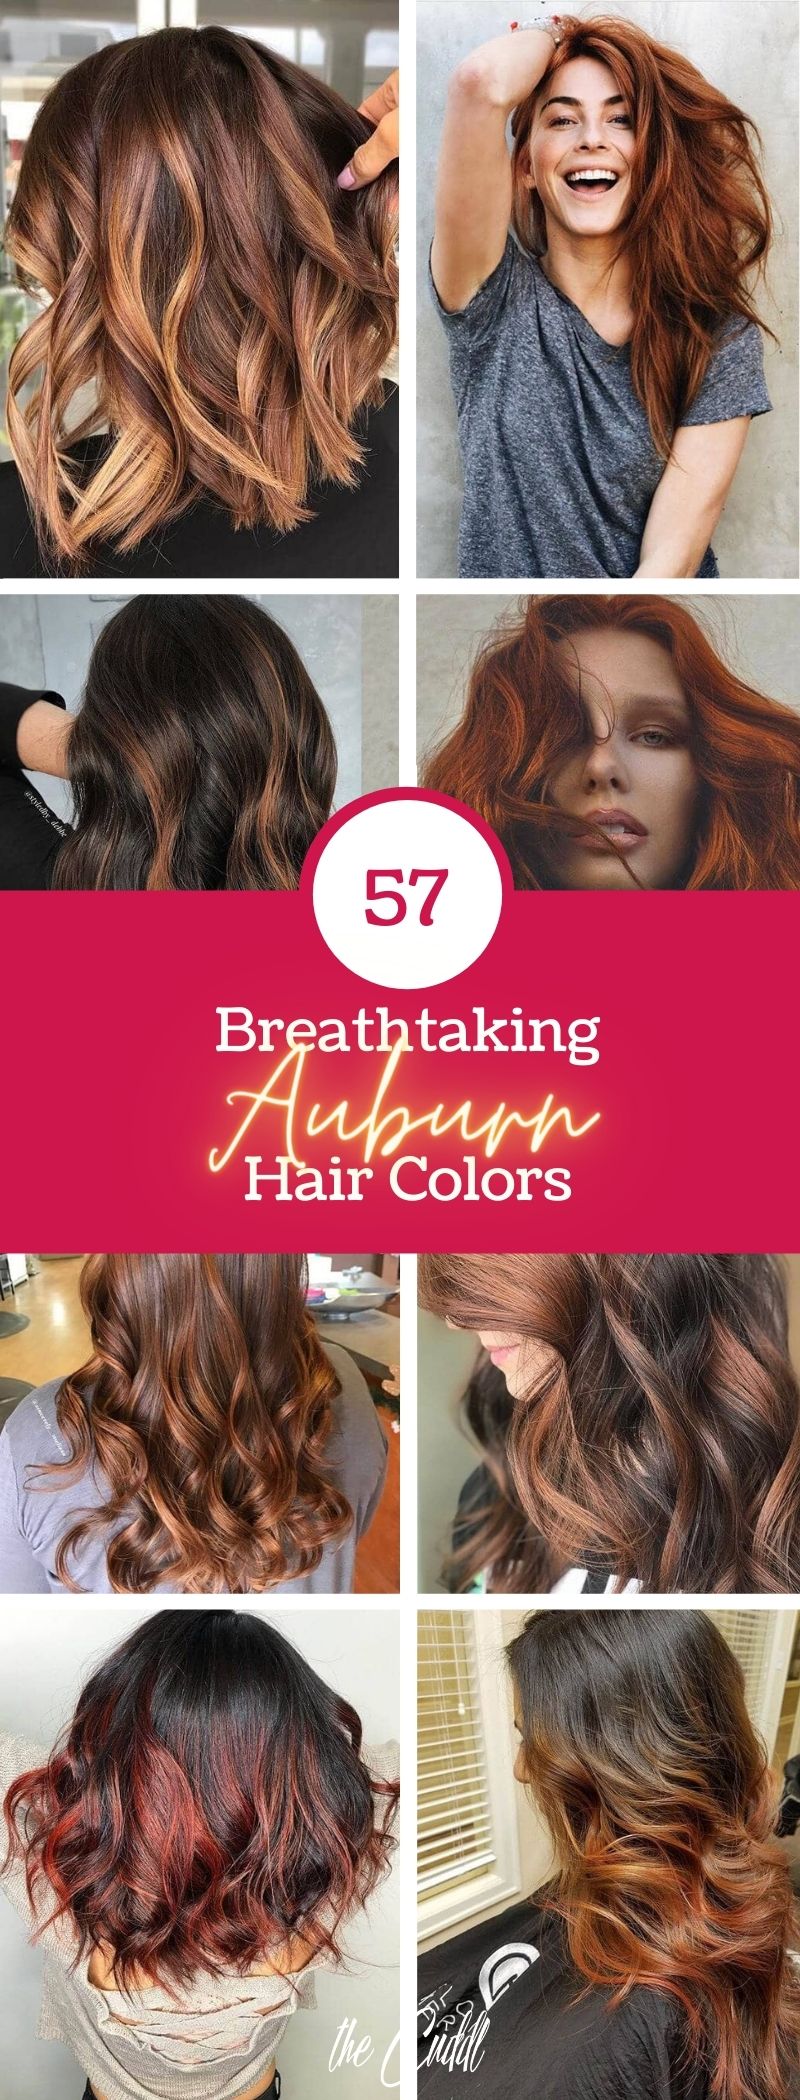 50 Breathtaking Auburn Hair Ideas To Level Up Your Look